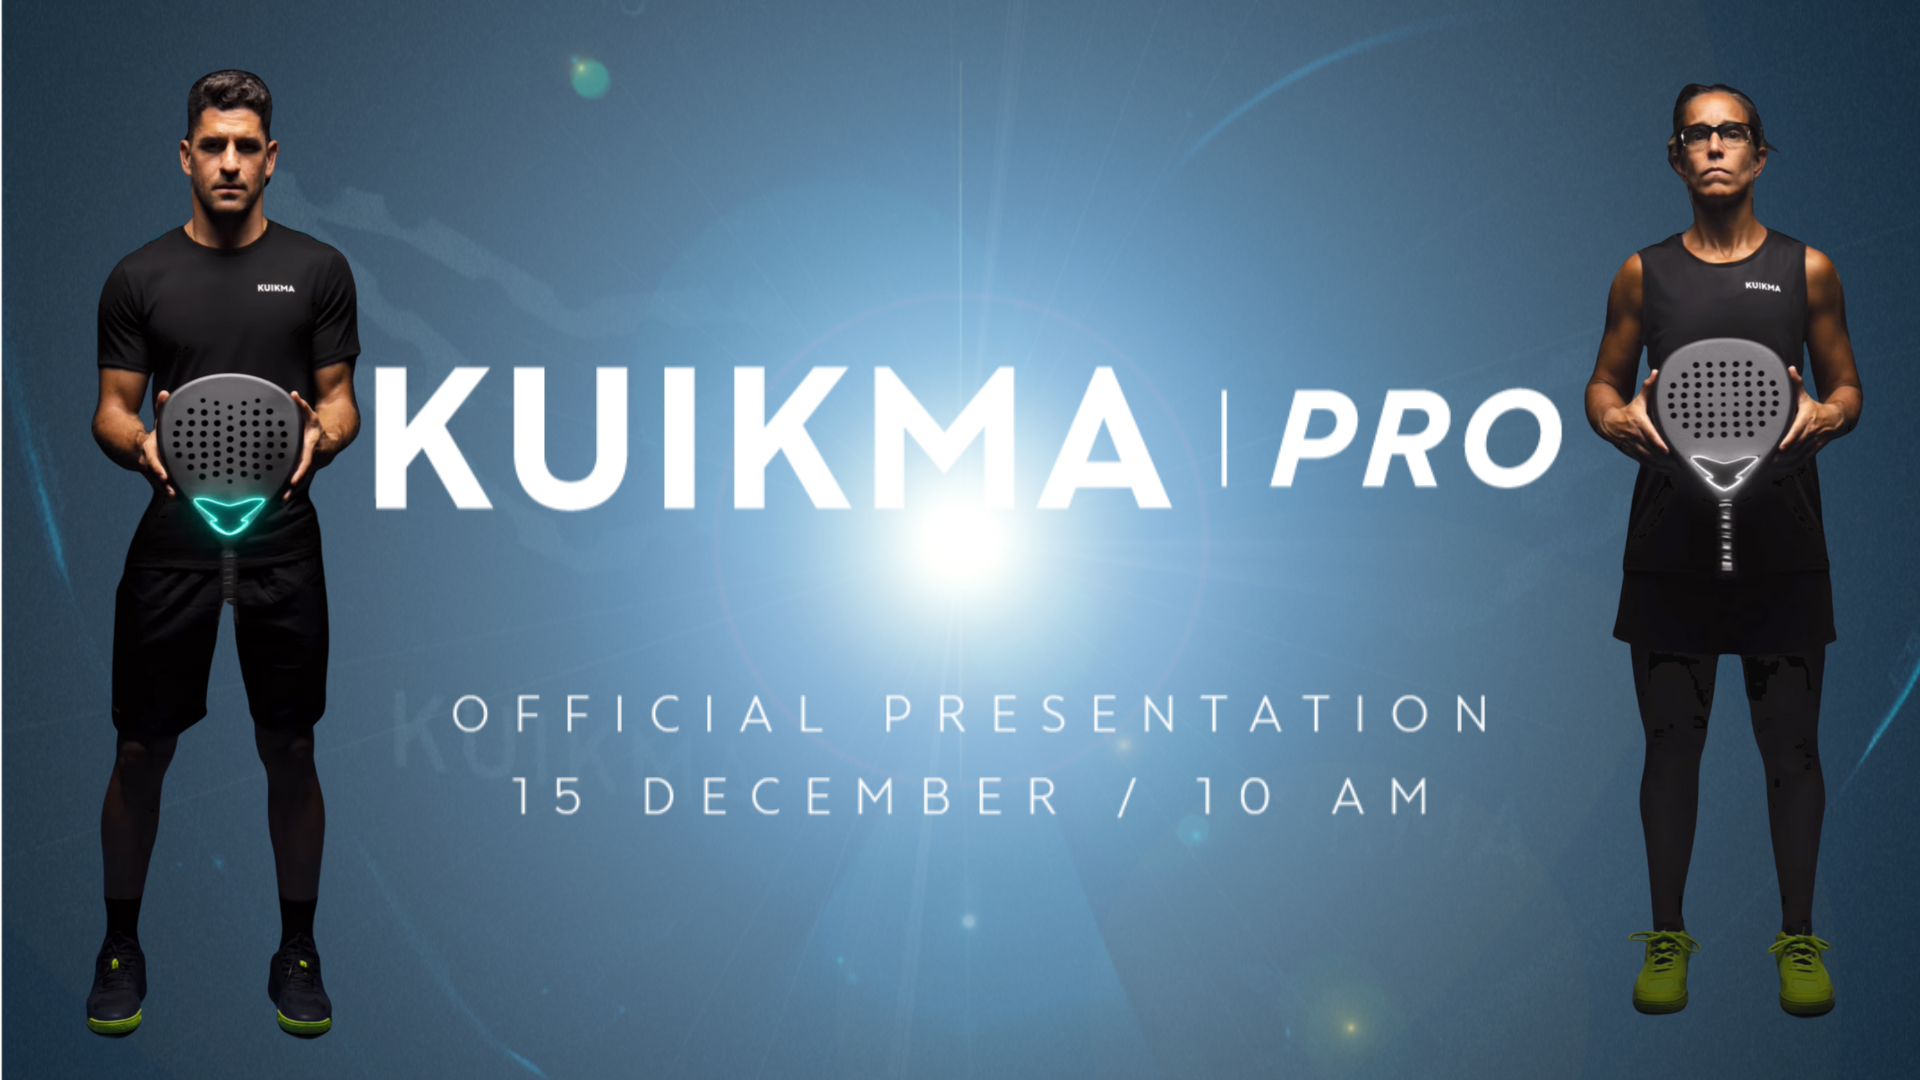 Kuikma Pro: a gama premium da marca em 2023